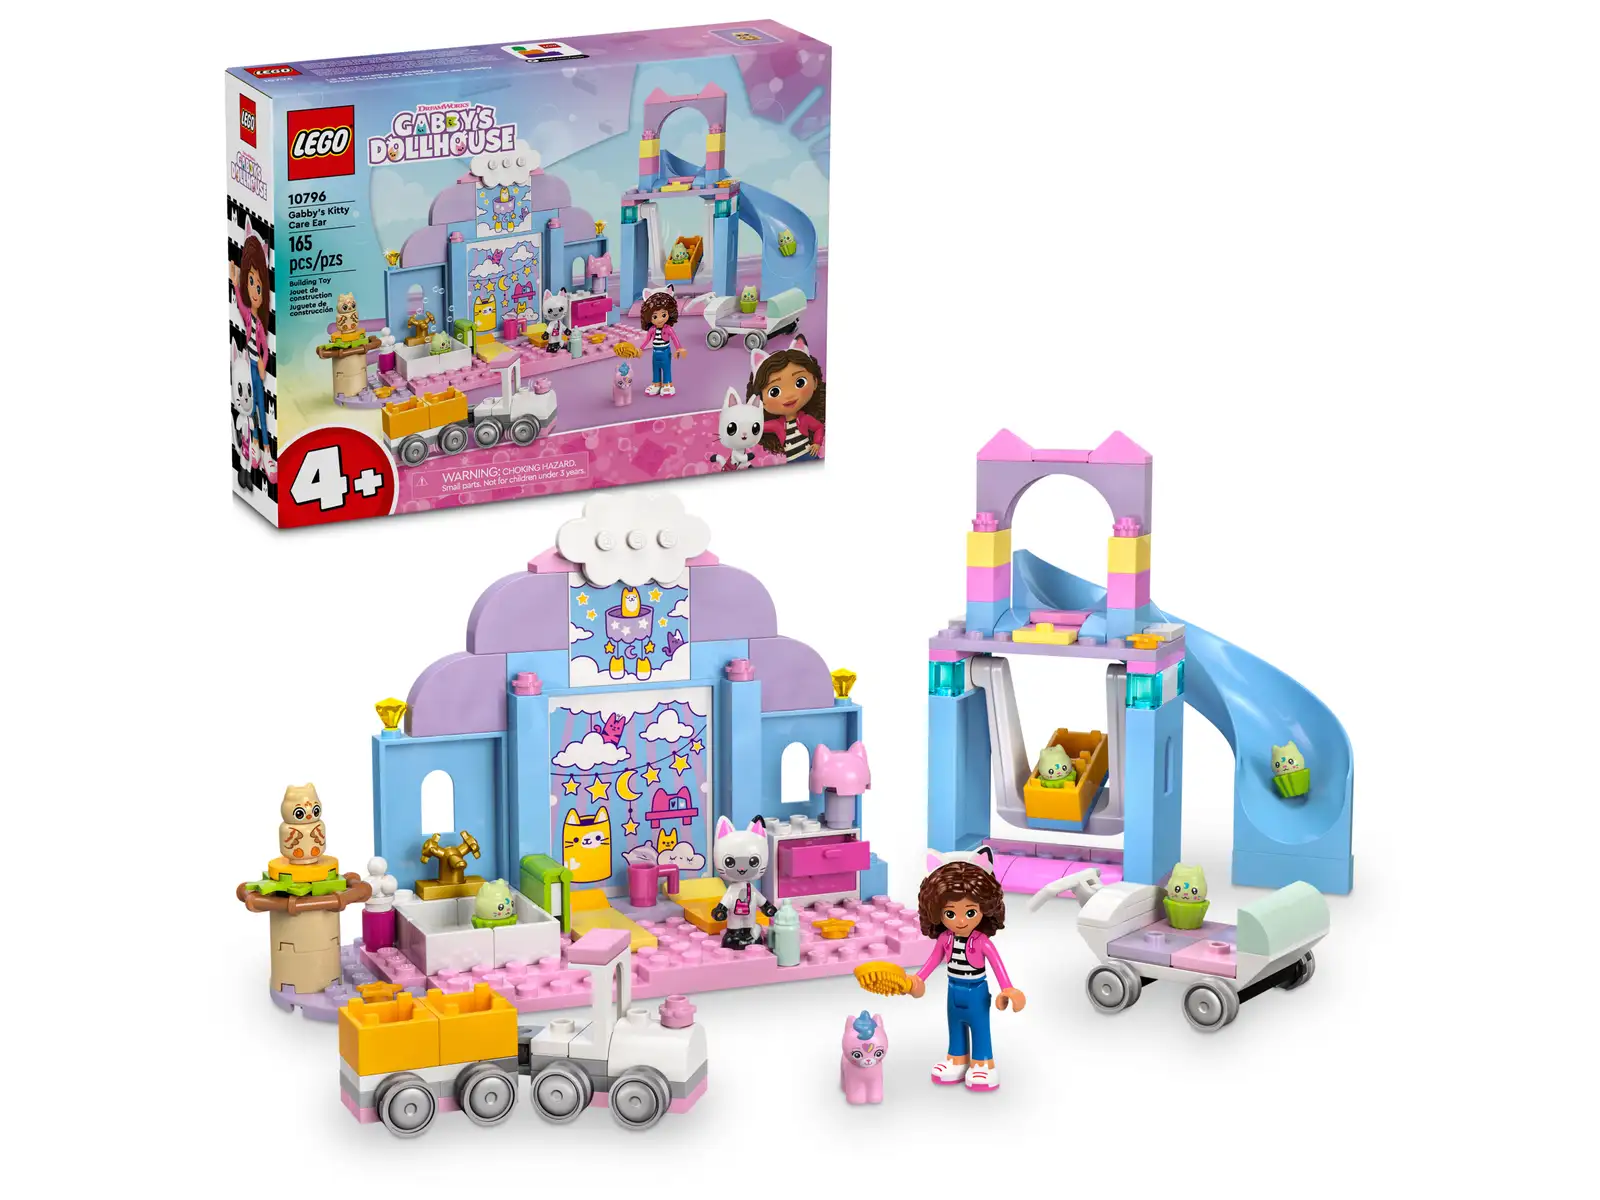 LEGO 10796 Gabbys kattungerom 10796 - Lego Gabby’s Dollhouse